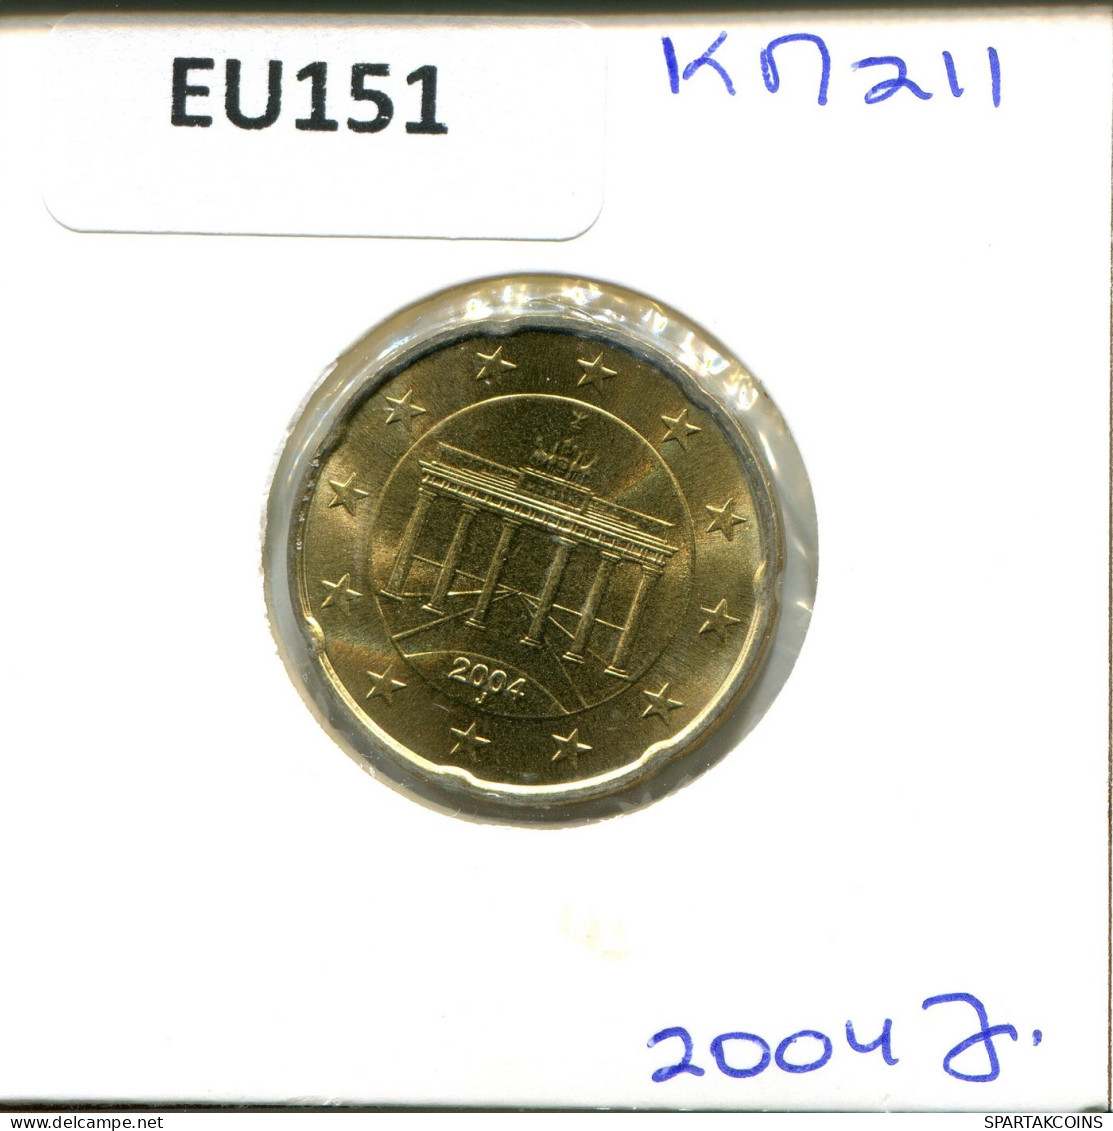 20 EURO CENTS 2004 DEUTSCHLAND Münze GERMANY #EU151.D.A - Germany